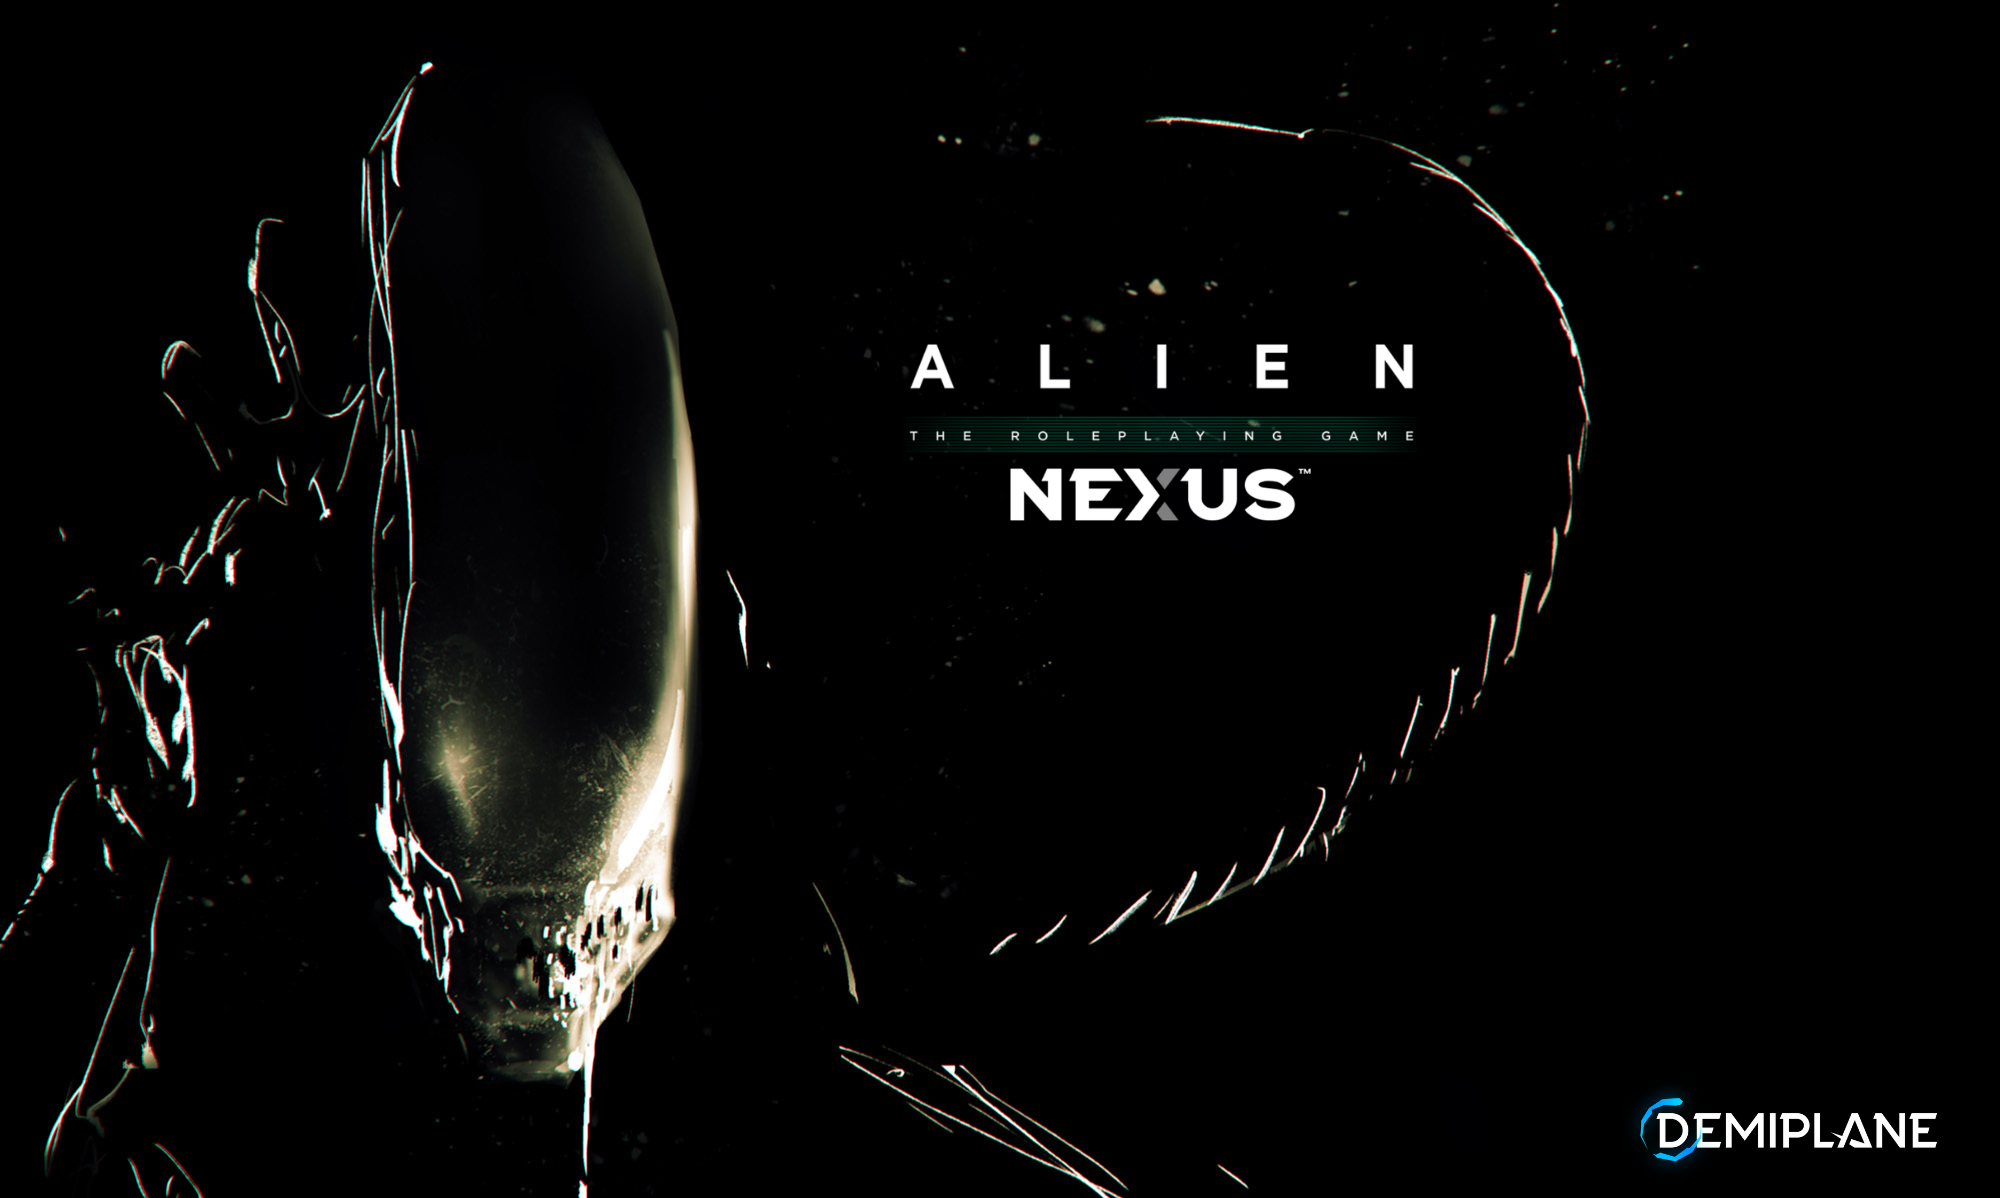 Hands on with Demiplane’s Alien RPG Nexus